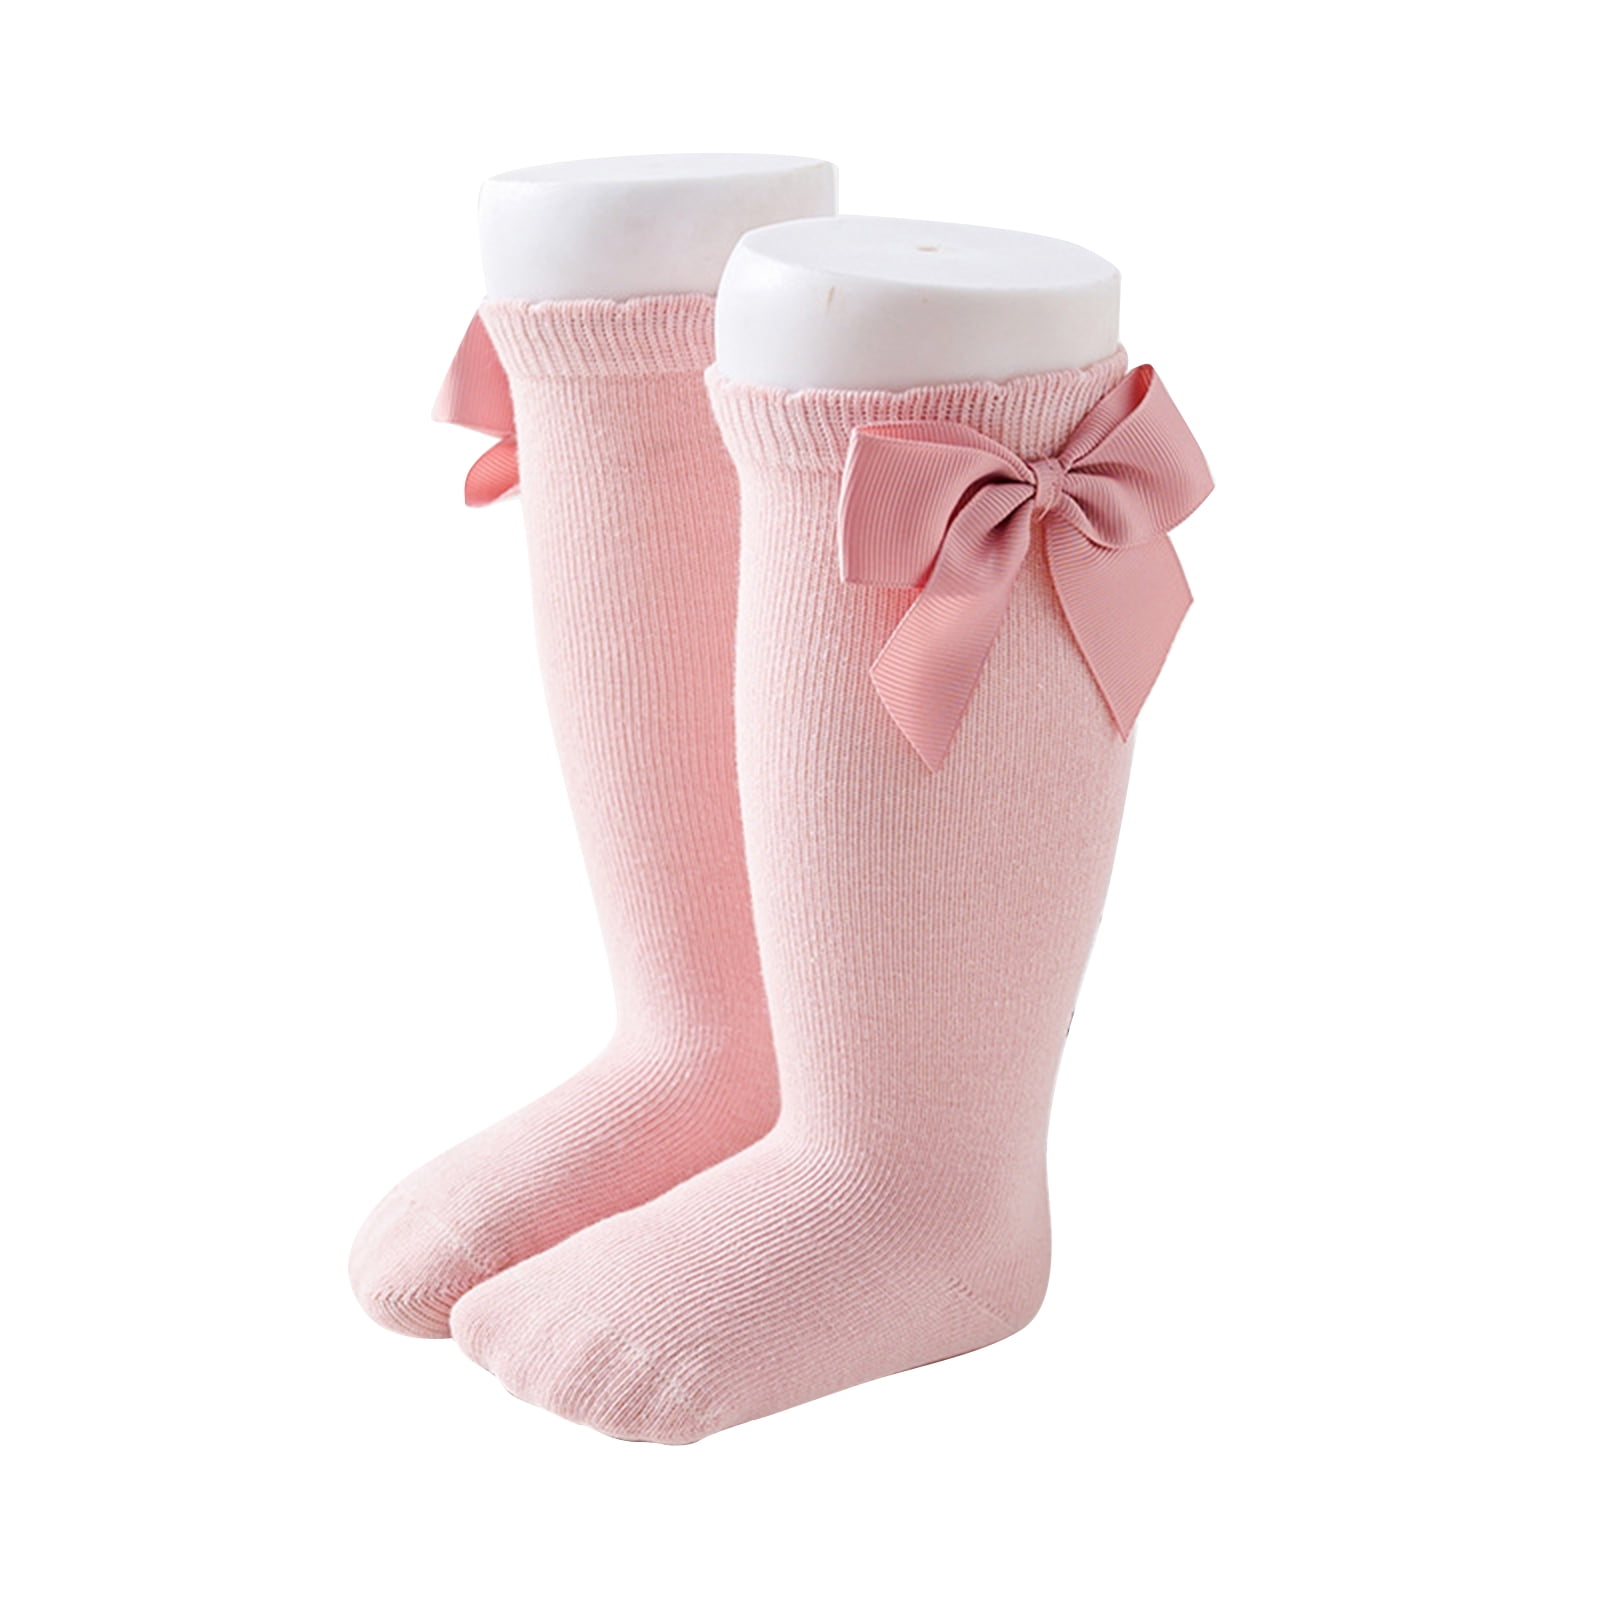 Toddler Kids Girls Cotton Bowknot Socks Solid Color Knee HIgh Socks Pearl Princess Party Stocking Leg Warmer